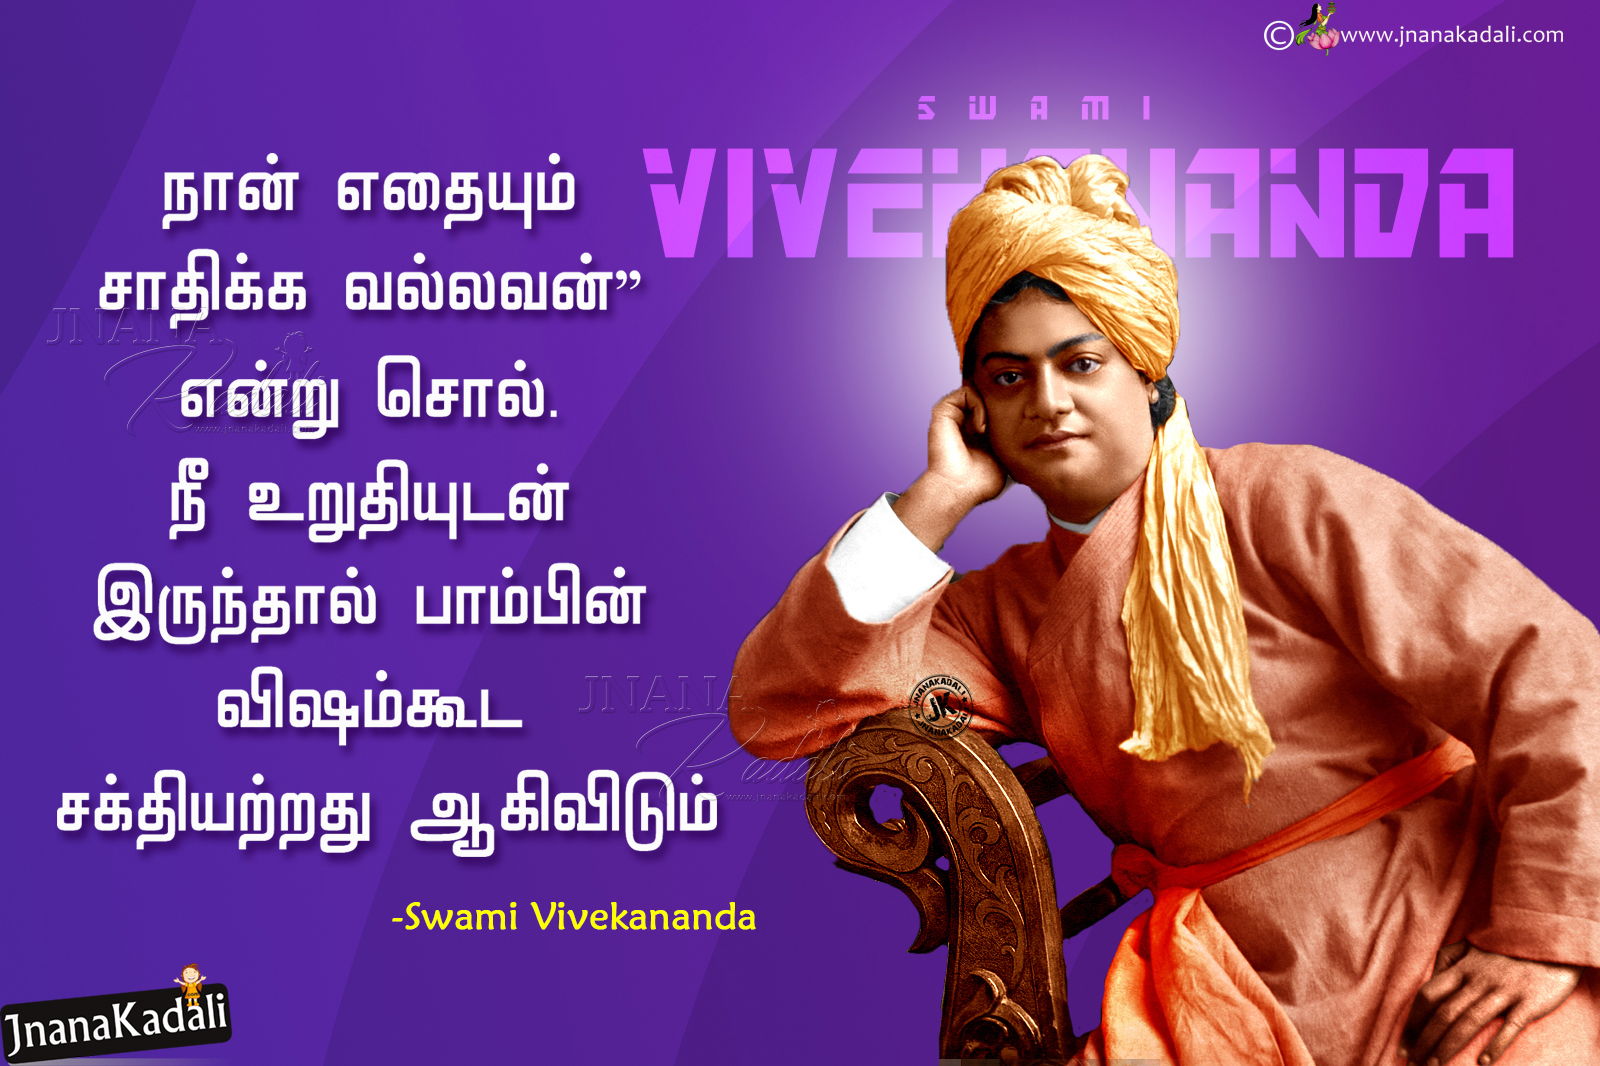 Swami vivekananda Tamil Motivational Speeches Famous Tamil